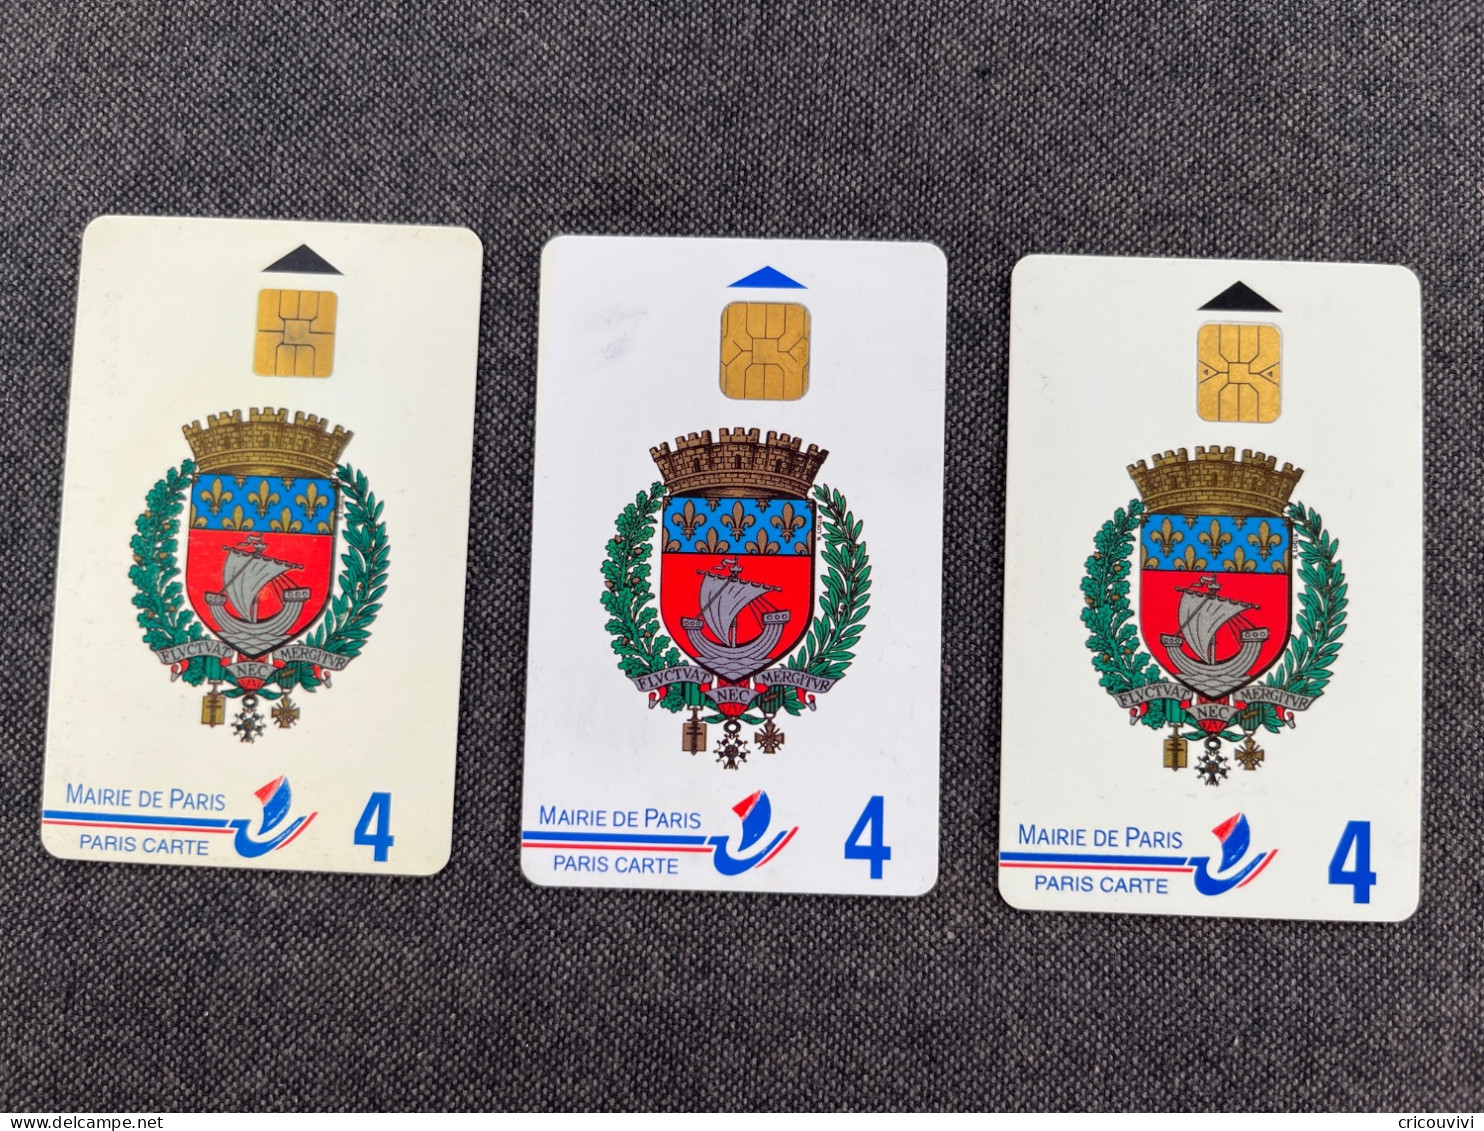 Paris Carte 6 - PIAF Parking Cards